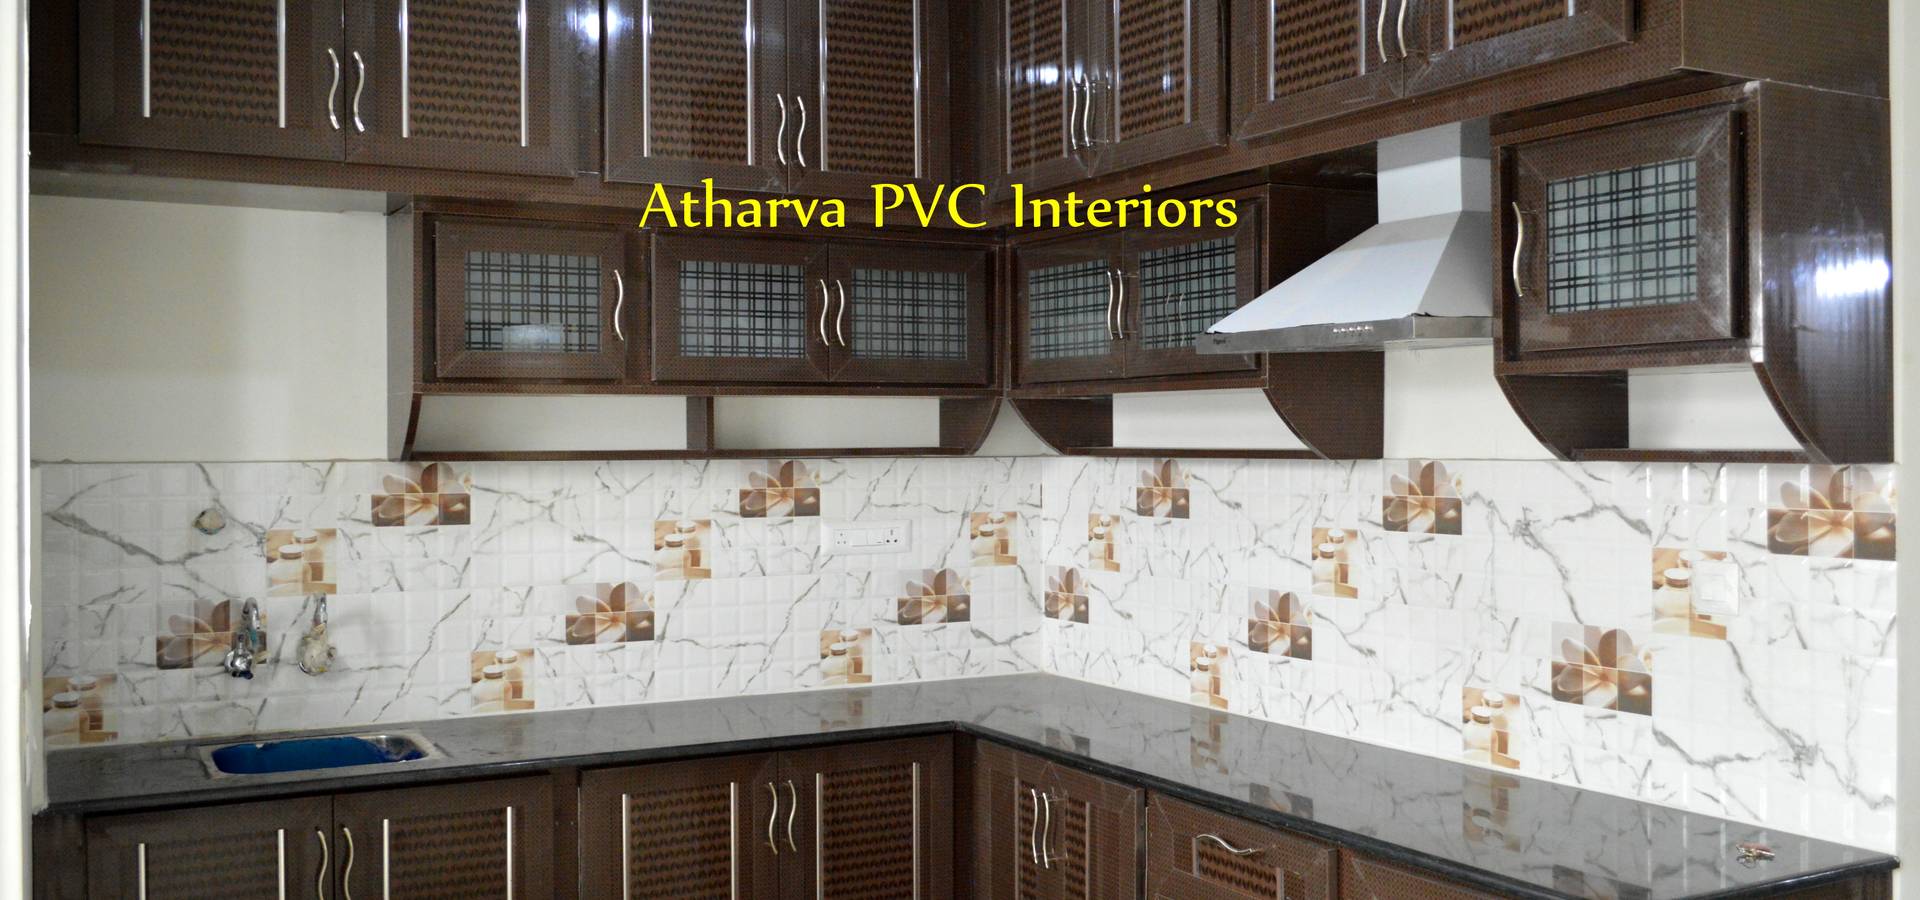 Atharva PVC Interiors